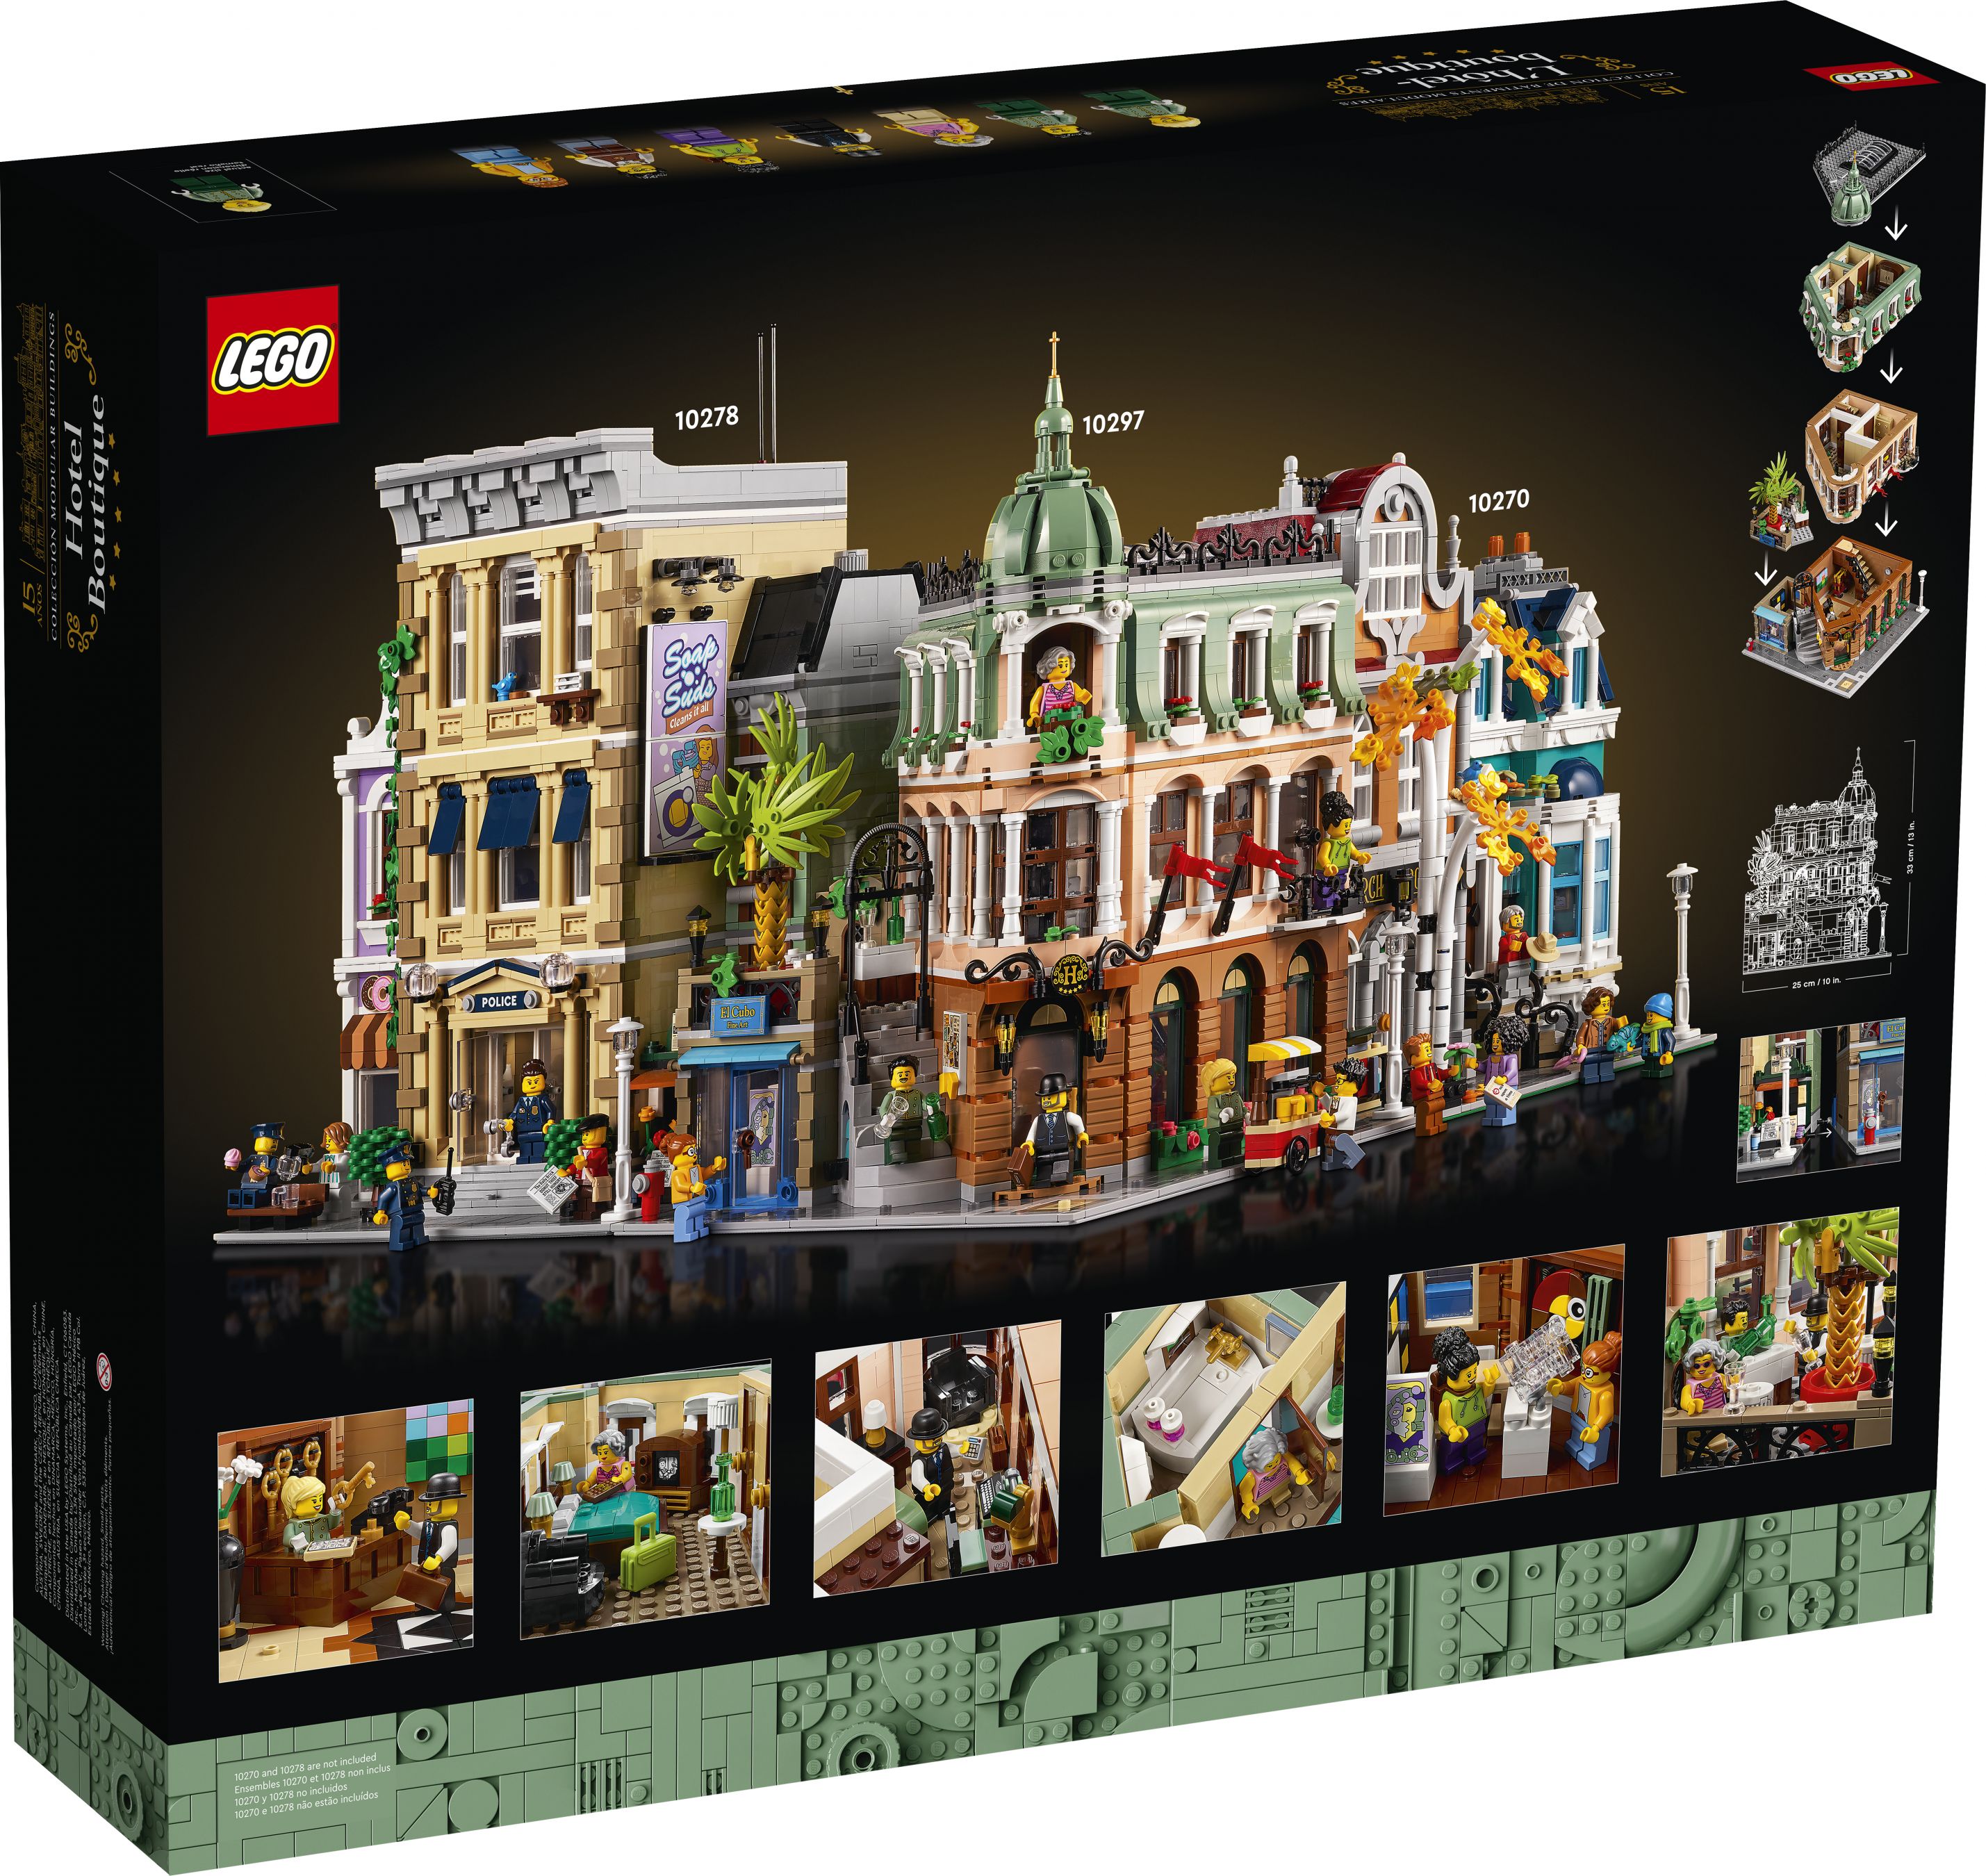 LEGO Advanced Models 10297 Boutique-Hotel LEGO_10297_Box5_v39.jpg